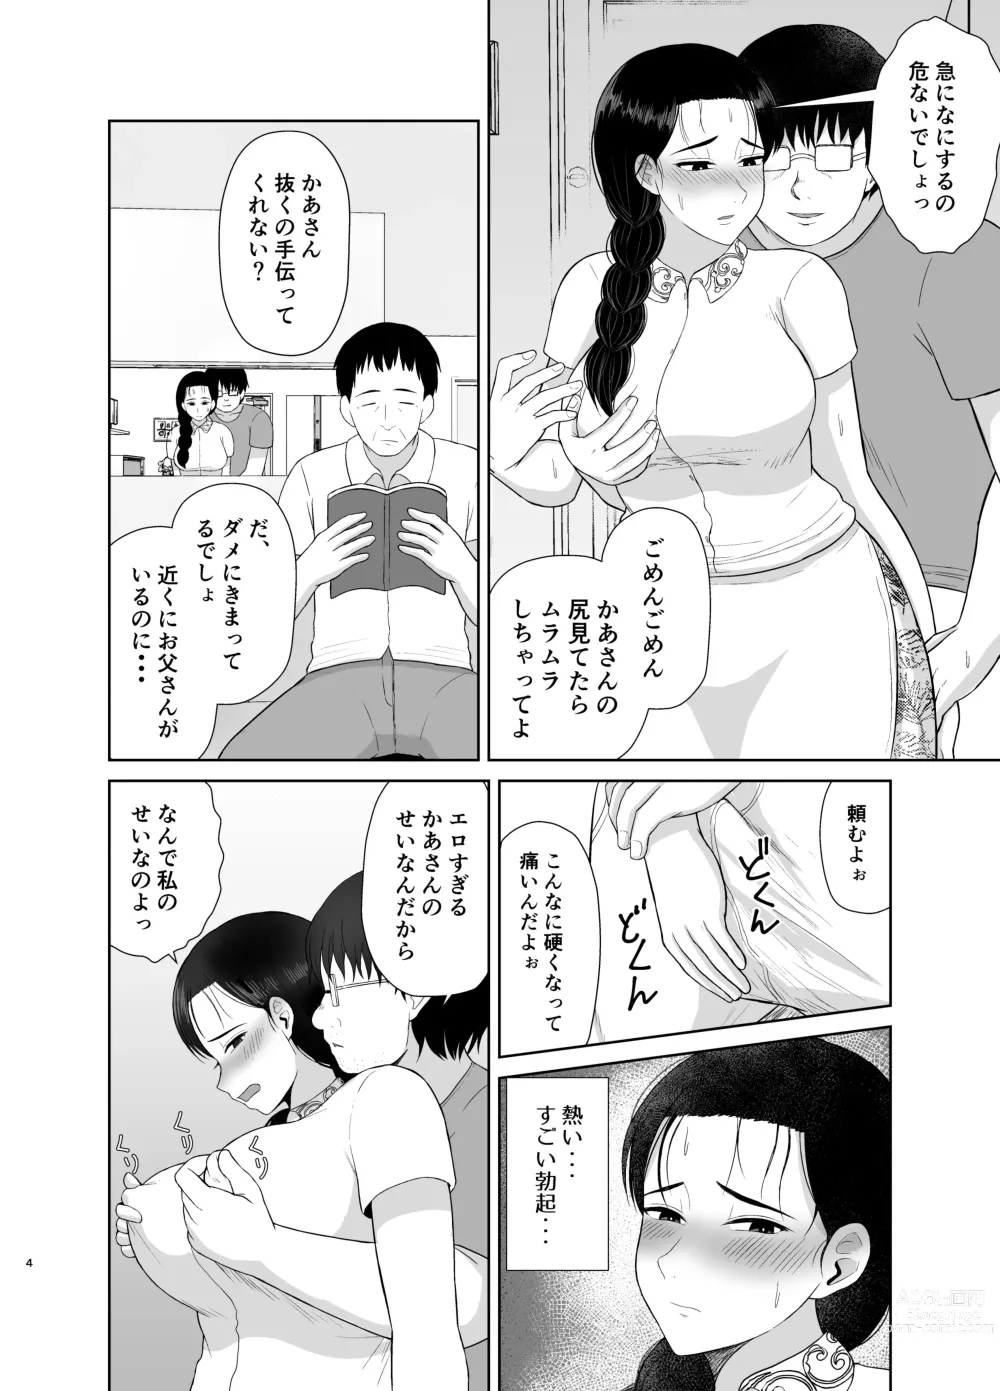 Page 4 of doujinshi Haha wa Omocha 2